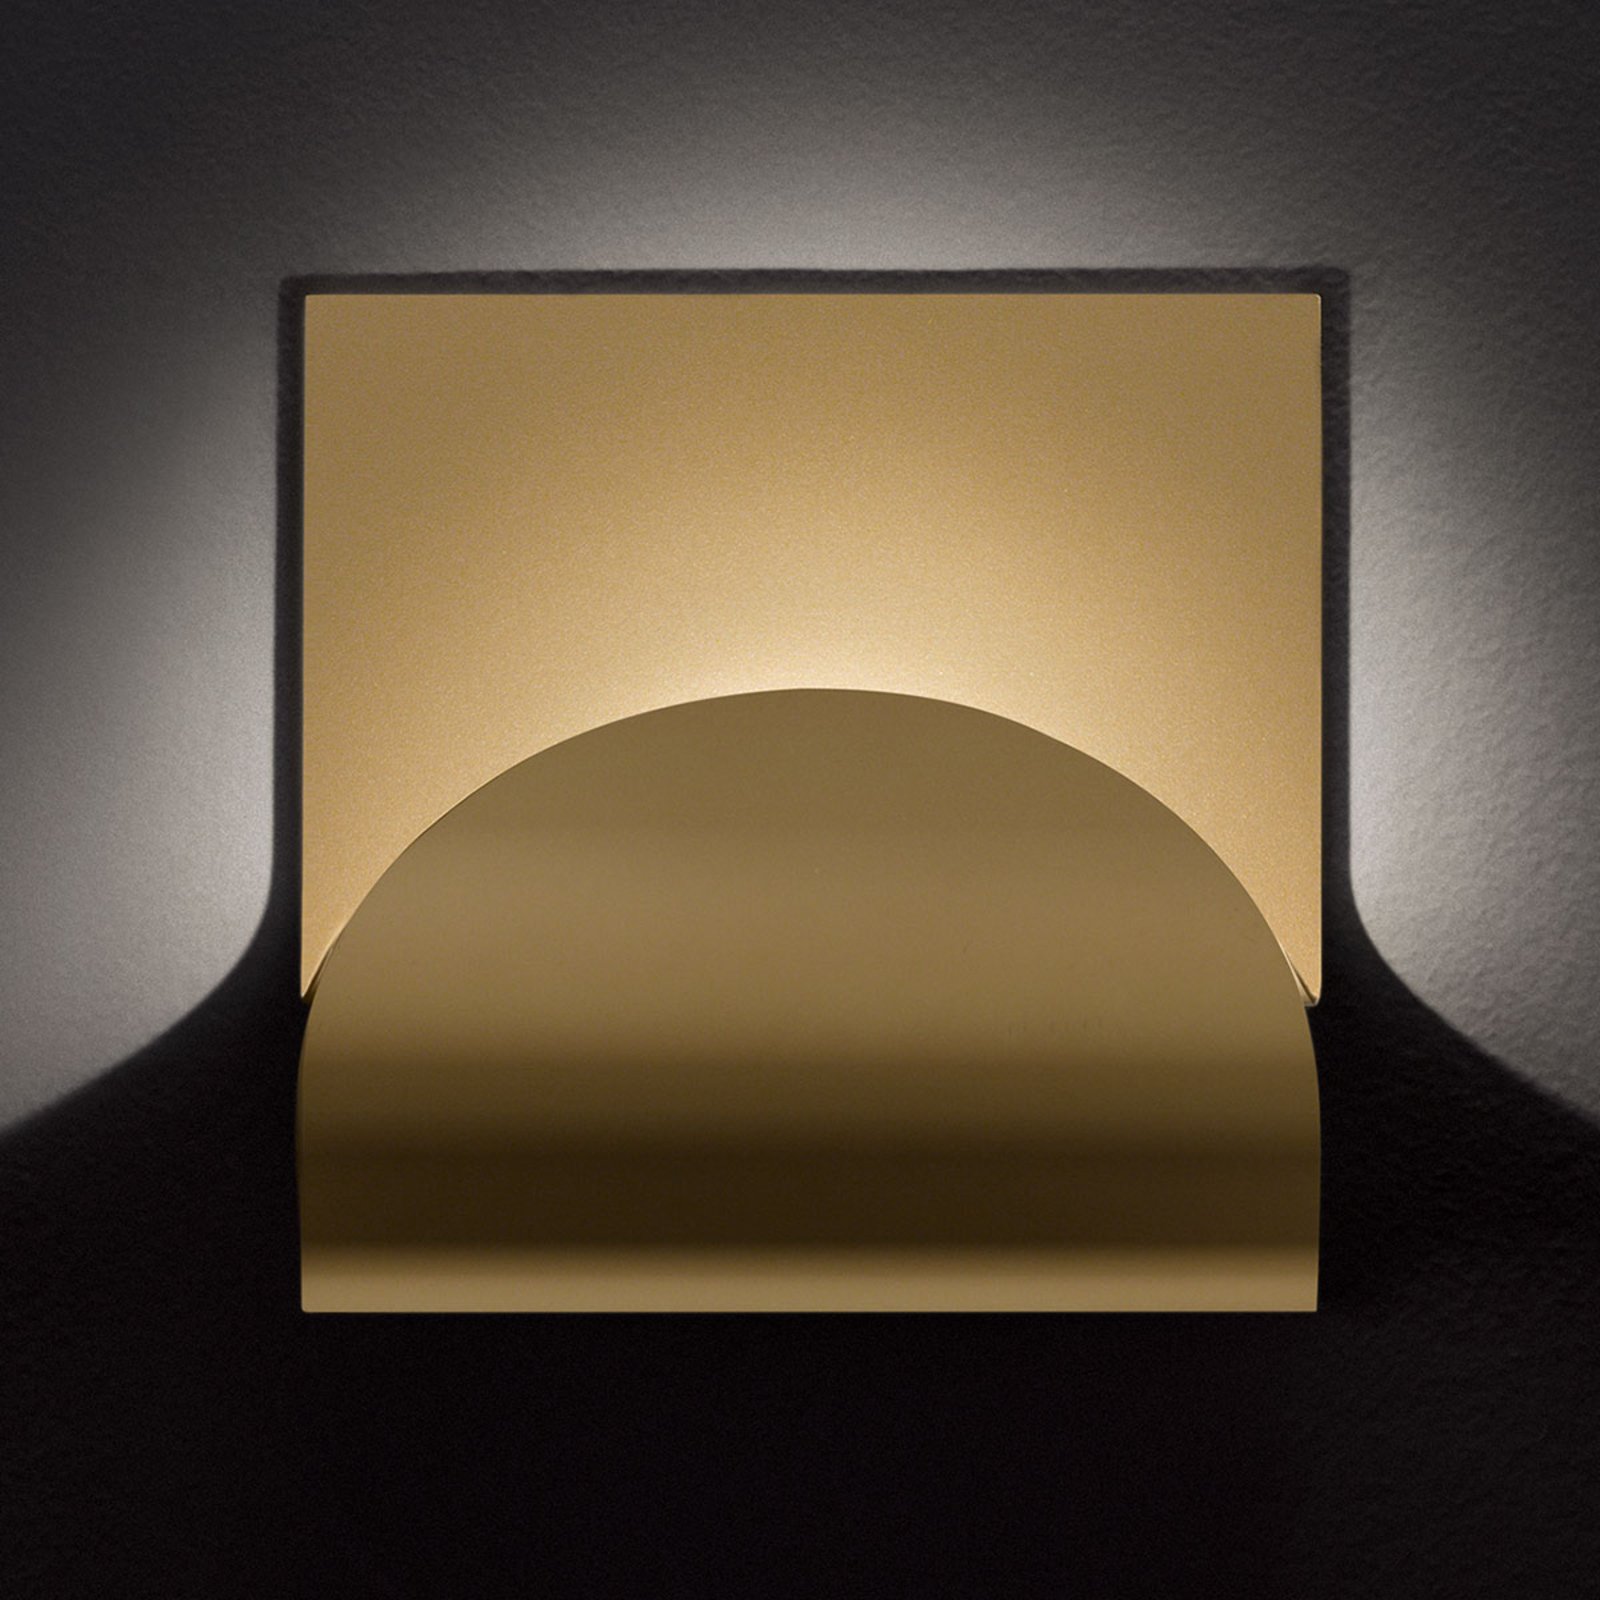 Cini&Nils Incontro LED fali lámpa matt arany